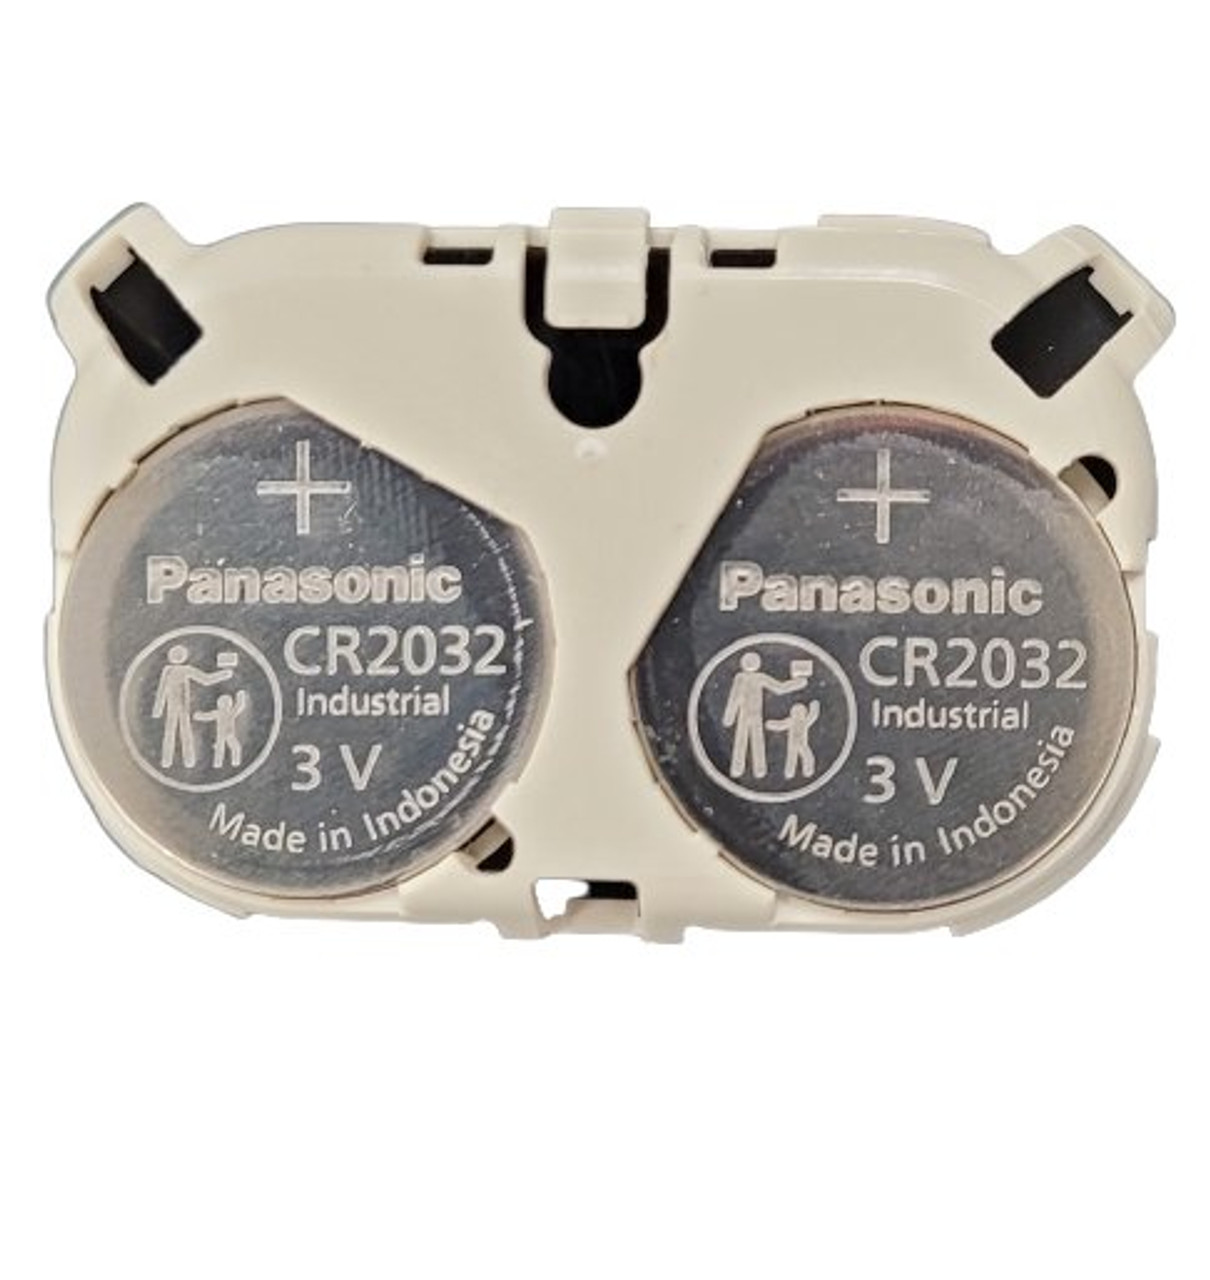 Panasonic Cr2032 3v Lithium Battery 2pack X (5pcs) =10 Single Use Batteries